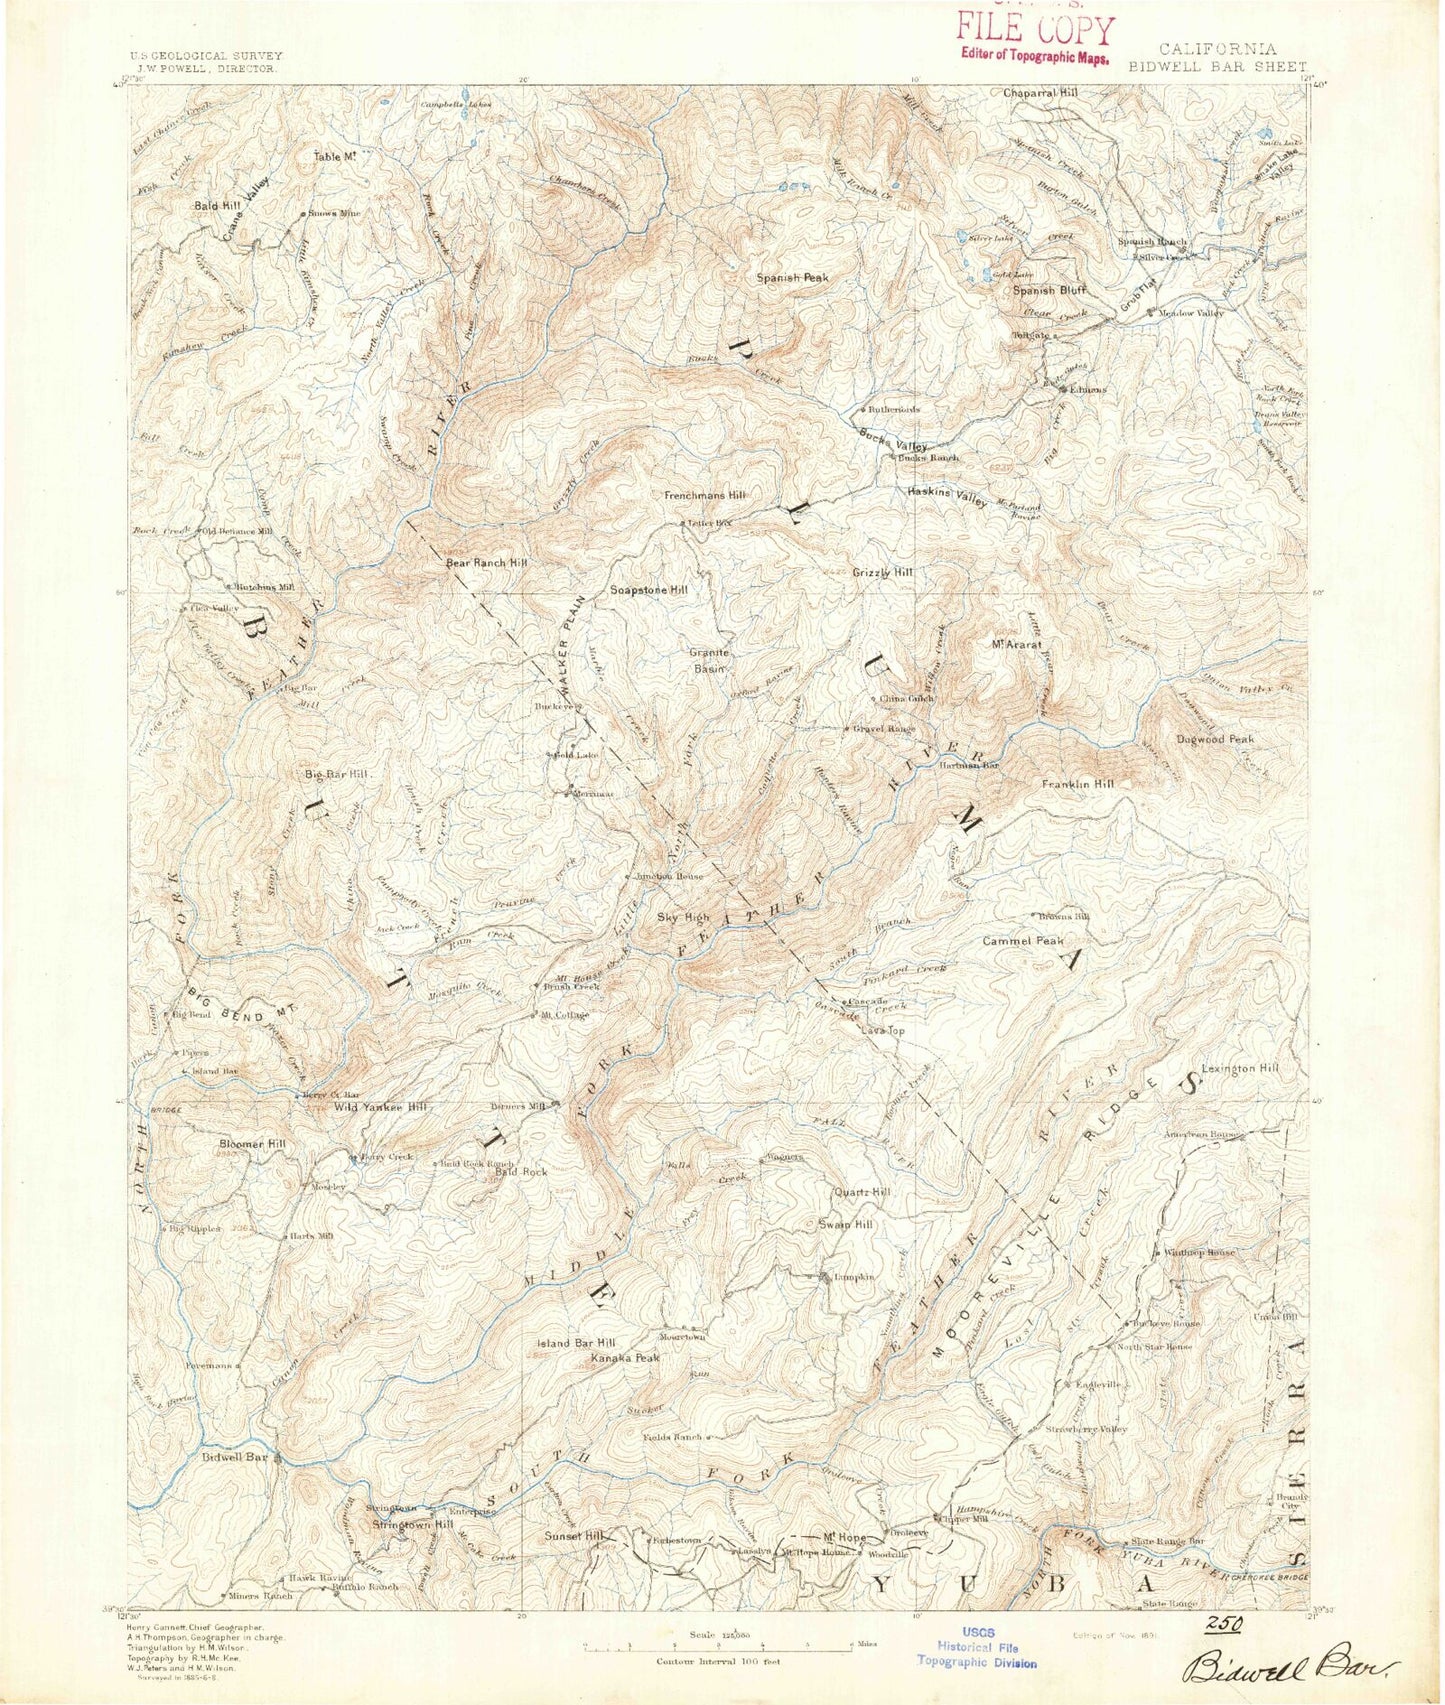 Historic 1891 Bidwell Bar California 30'x30' Topo Map Image